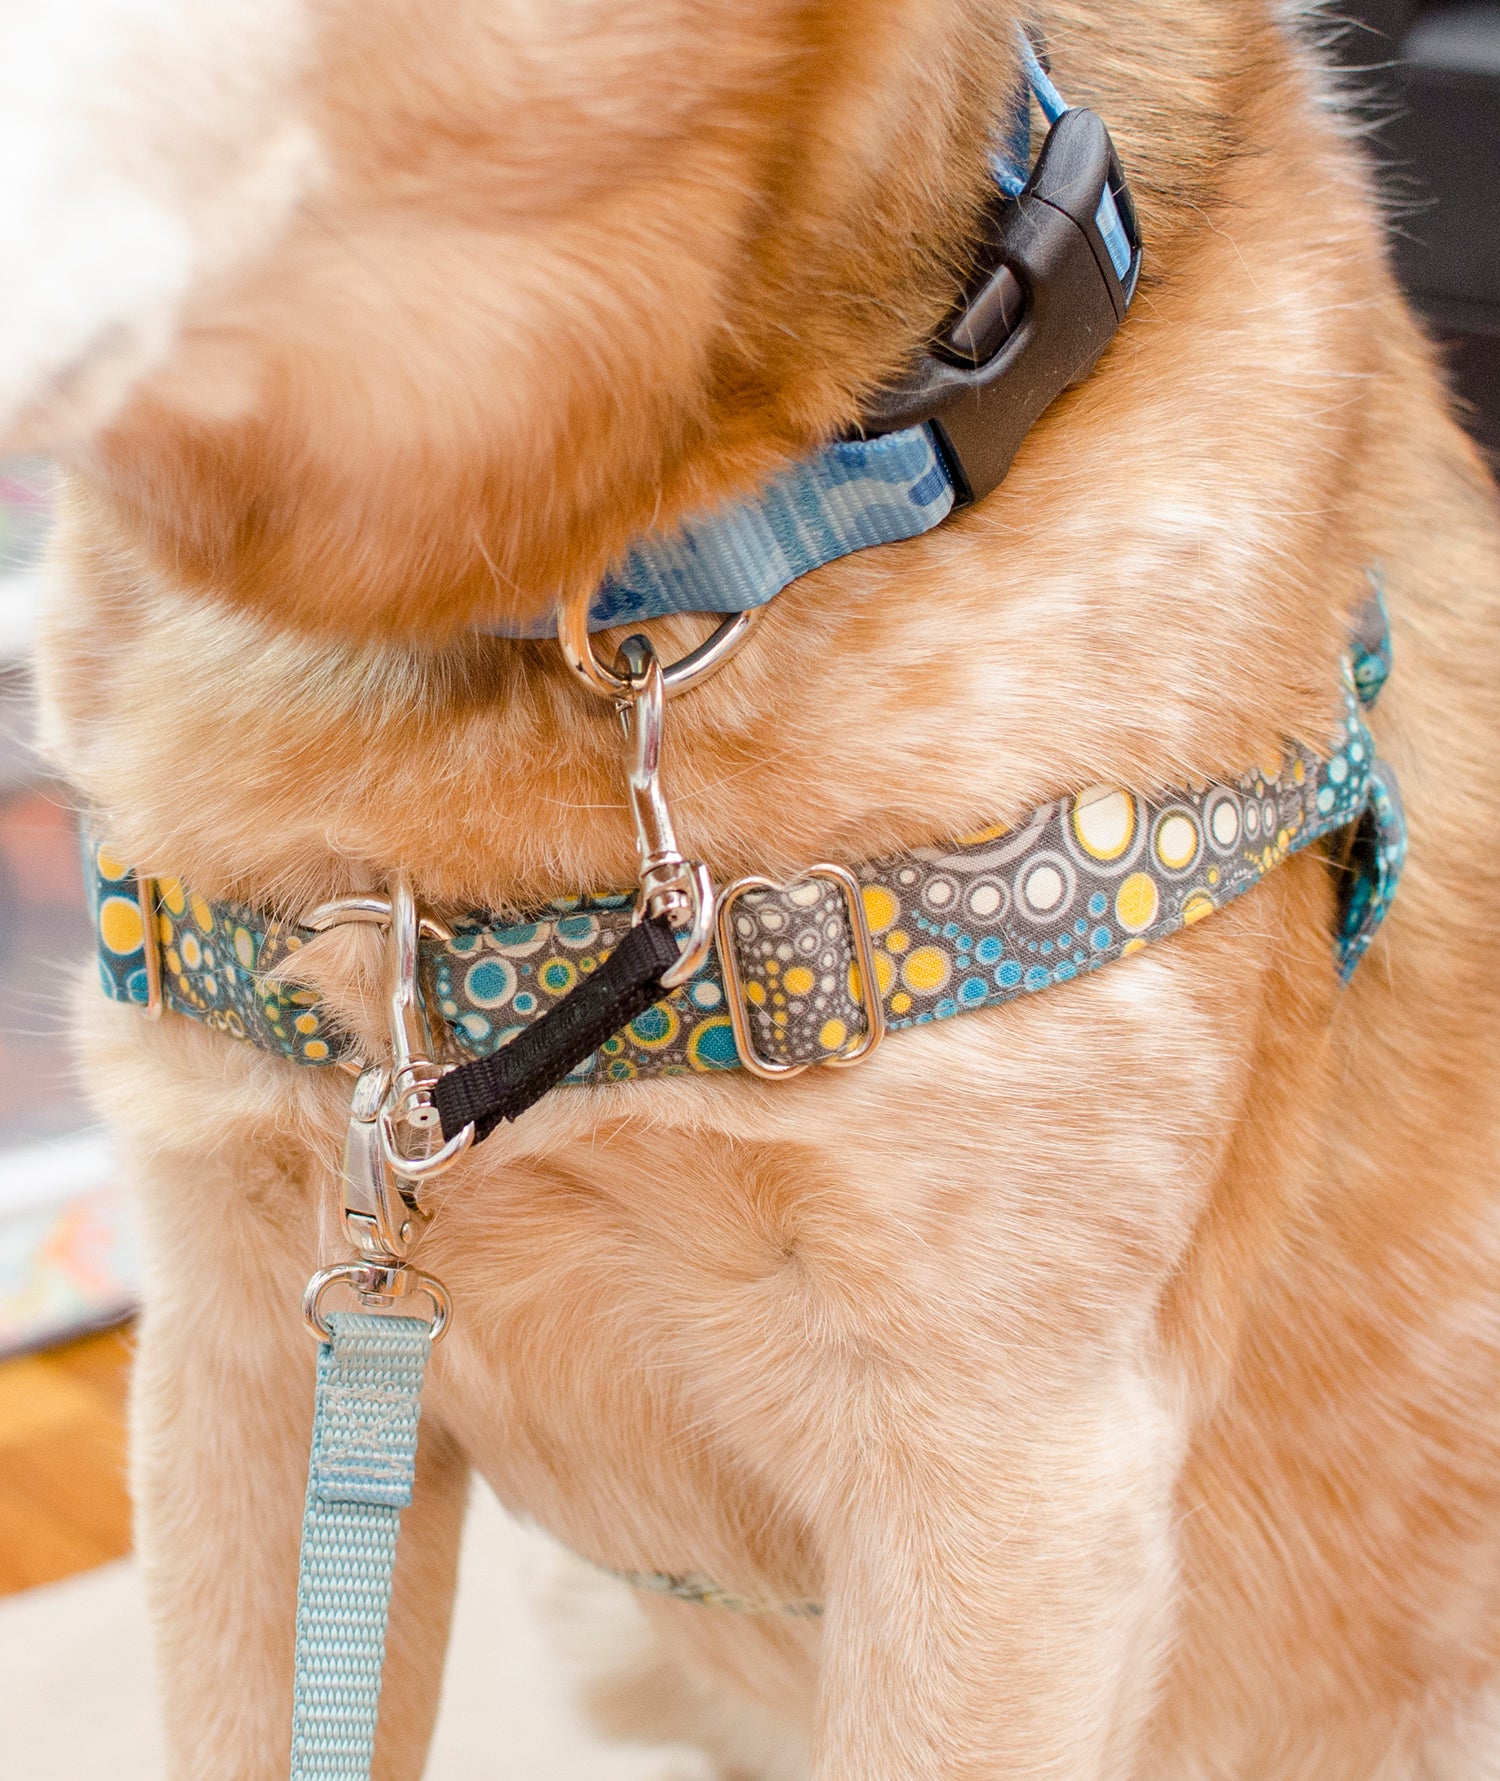 Hot Dog Collars  Custom, Personalized Dog Collars & ID Tags